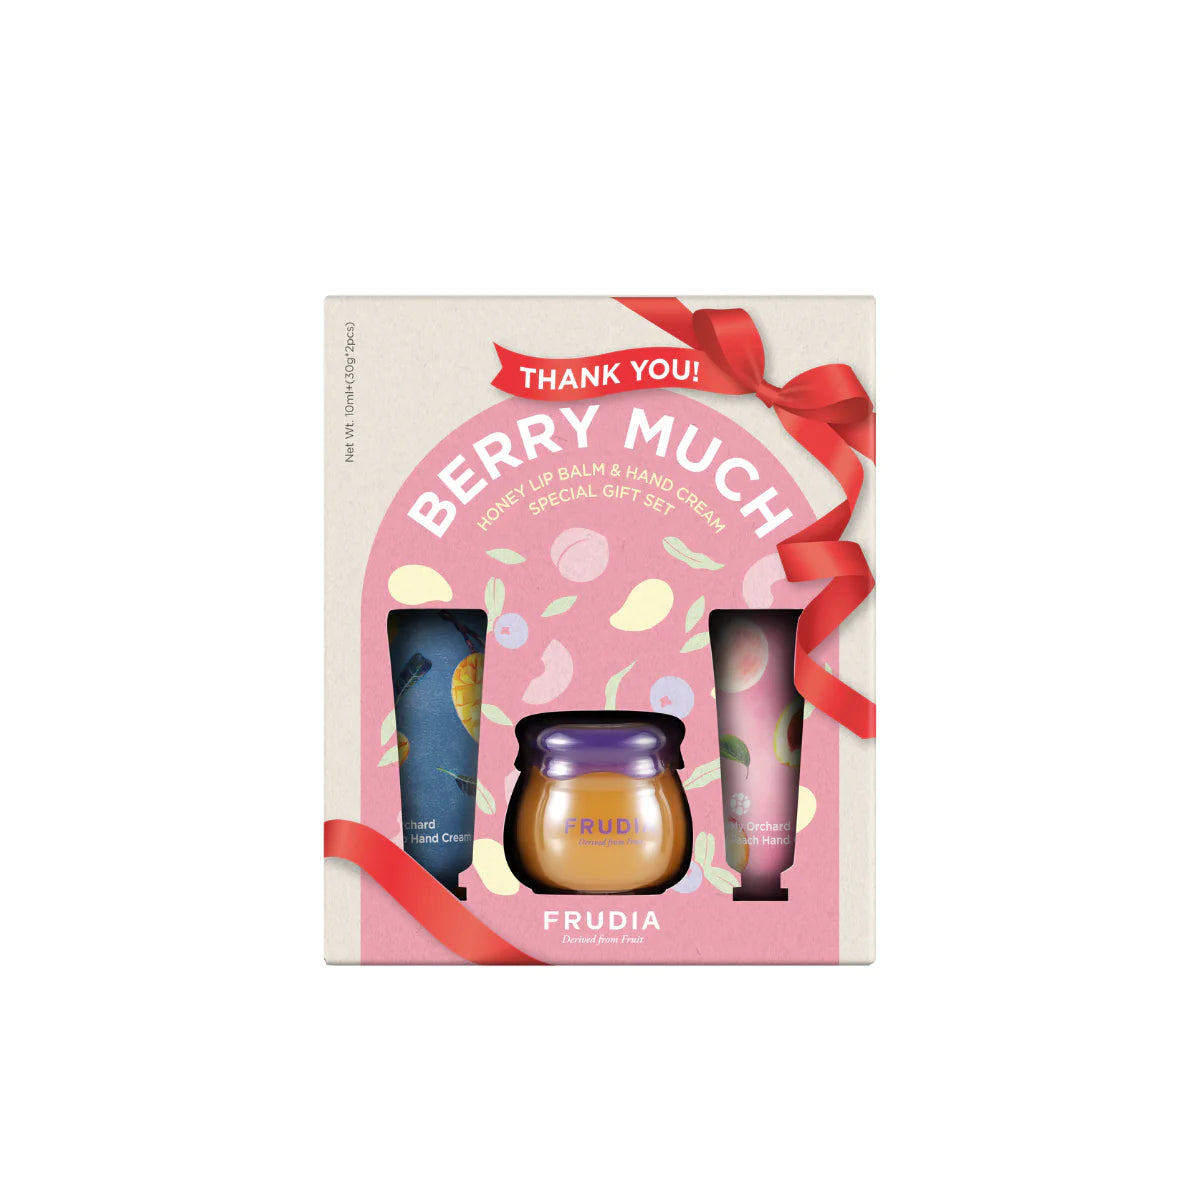 FRUDIA Honey Lip Balm & Hand Cream Gift Set THANK YOU BERRY MUCH (10ml + 30g * 2pcs) - DODOSKIN